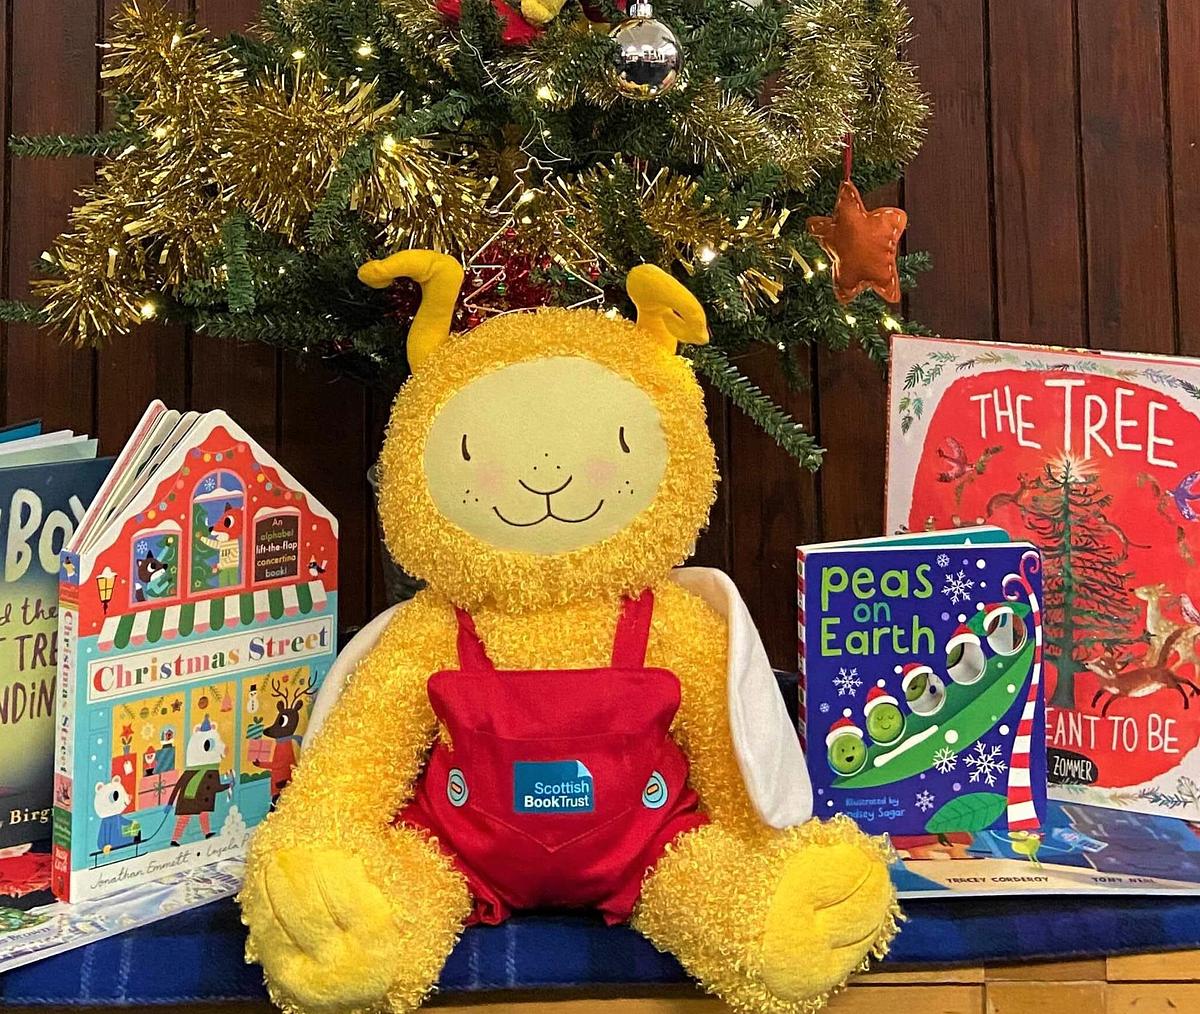 Large Bookbug doll sat amongst festive books underneath a Christmas tree